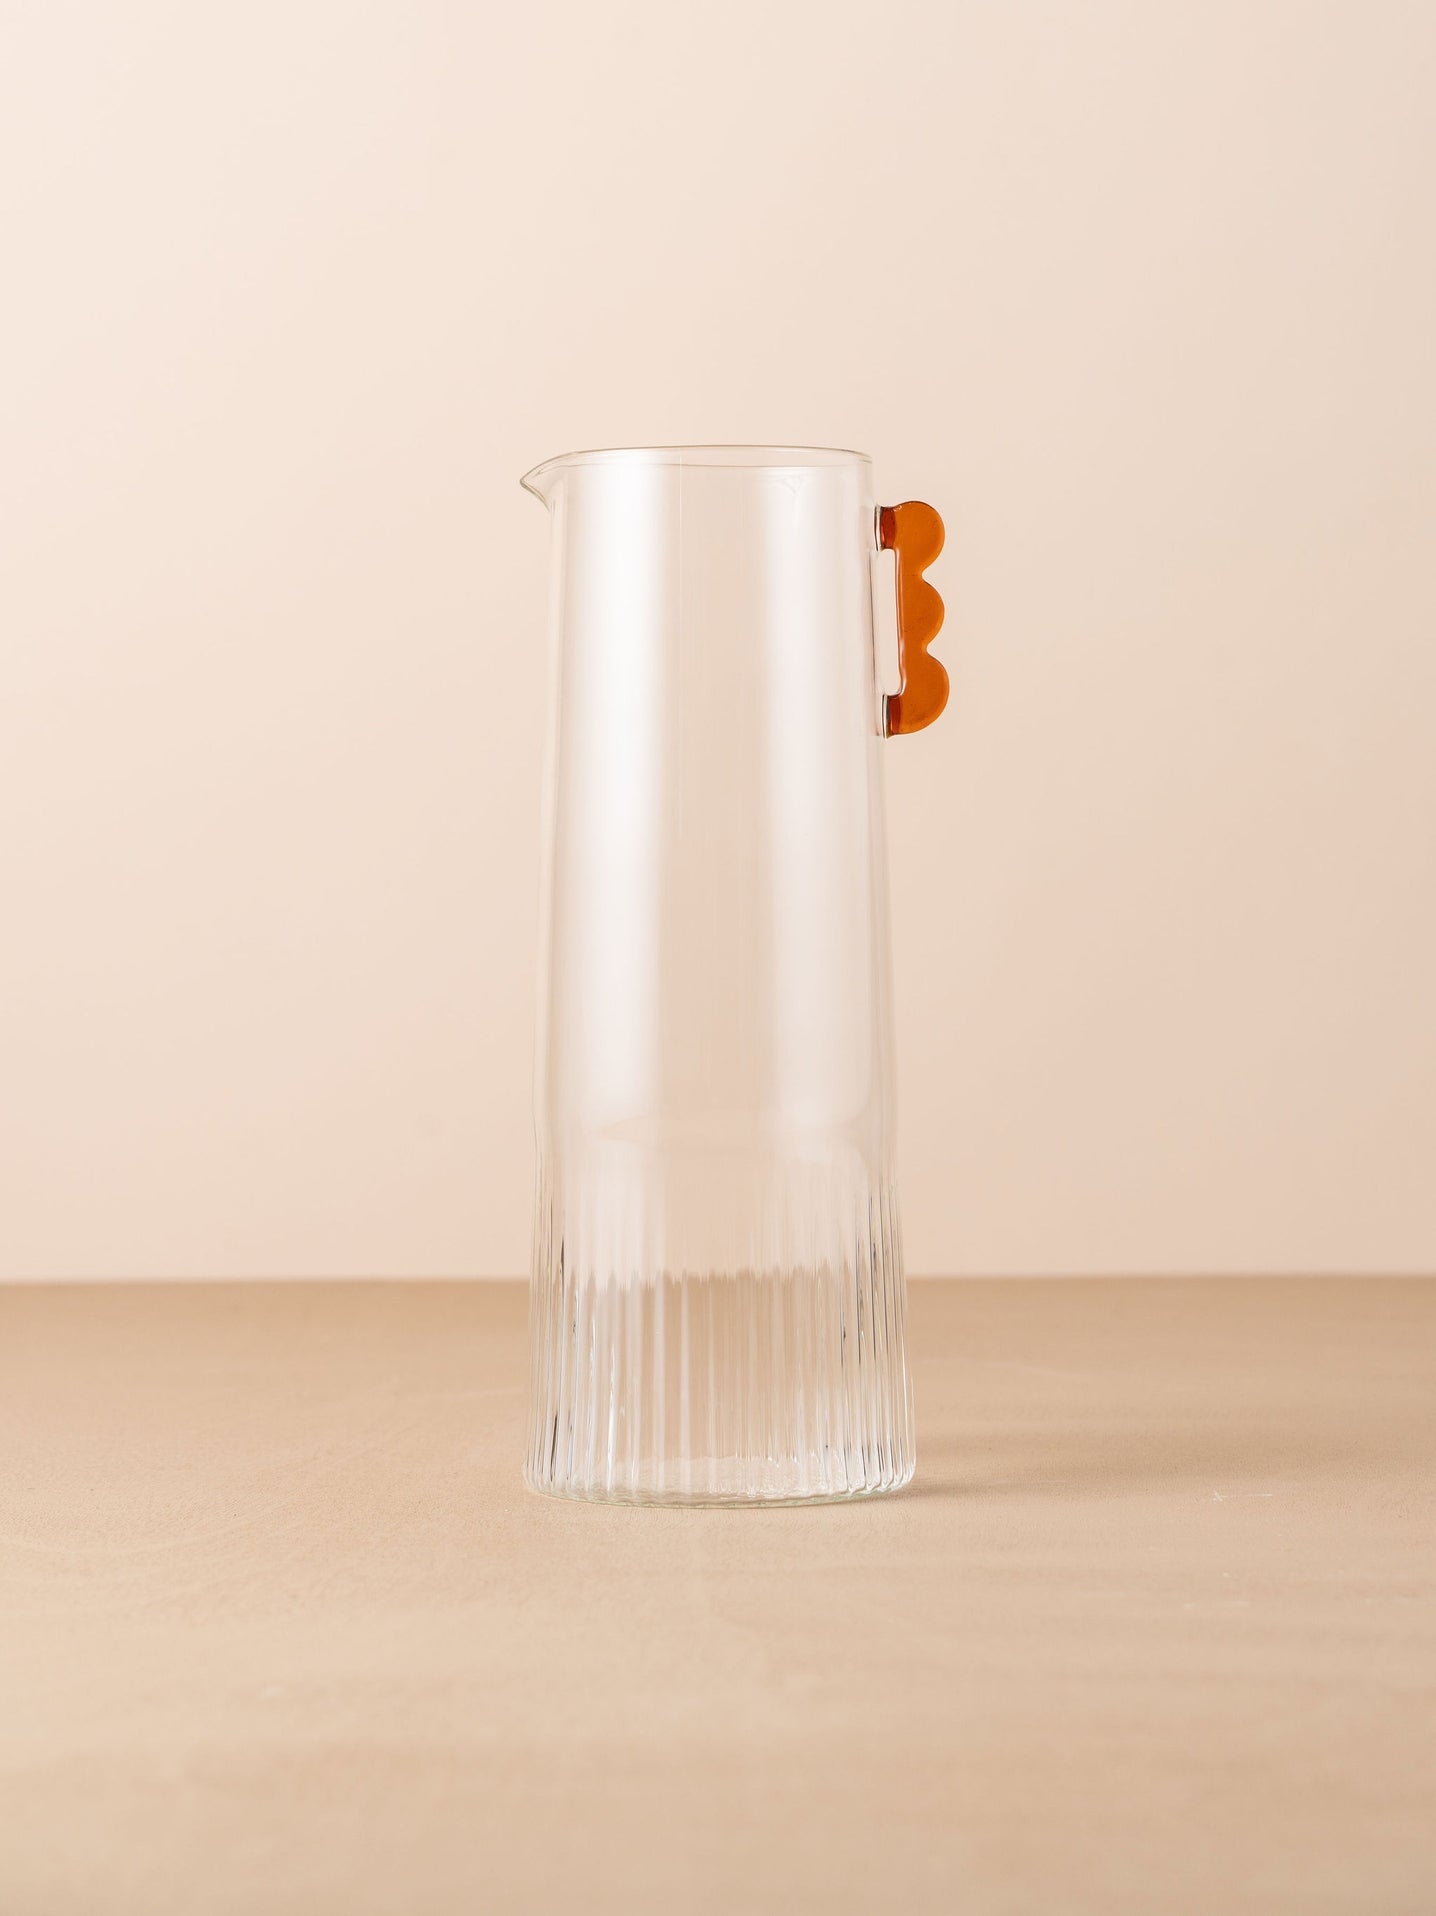 Saardé saarde kairos carafe collection glass pitcher